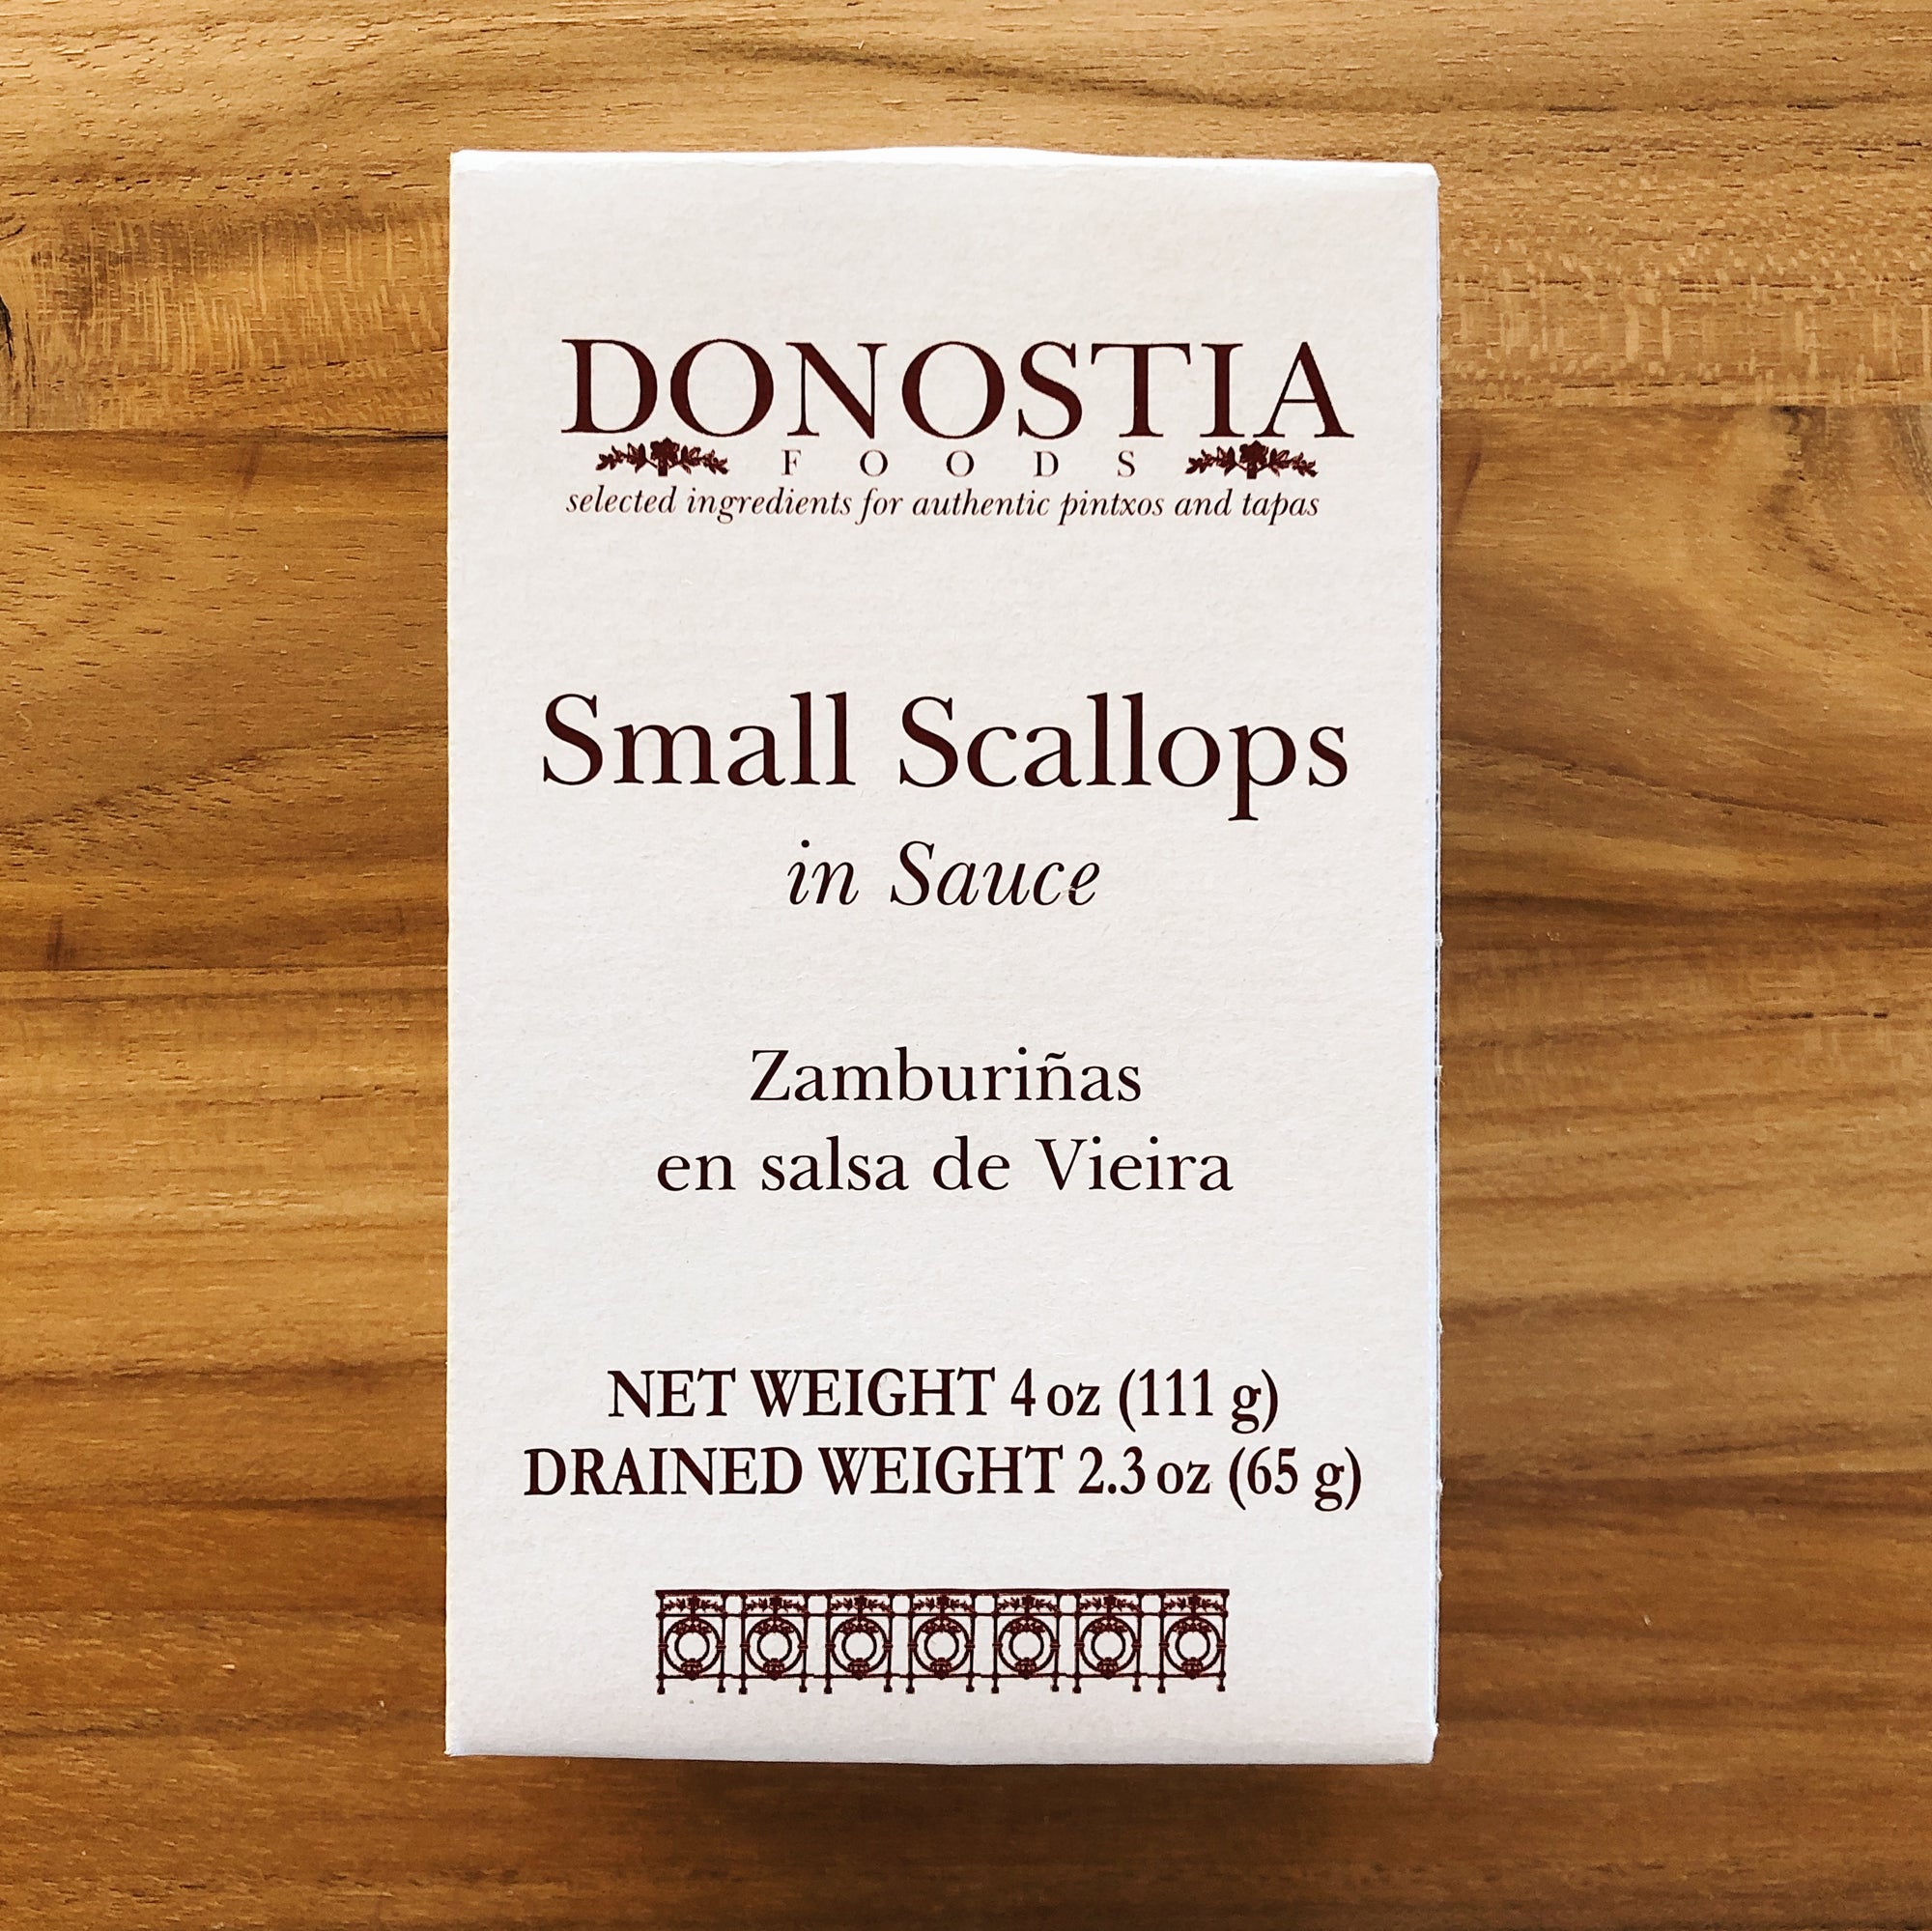 Zamburinas en salsa - small scallops in sauce - Donostia Foods